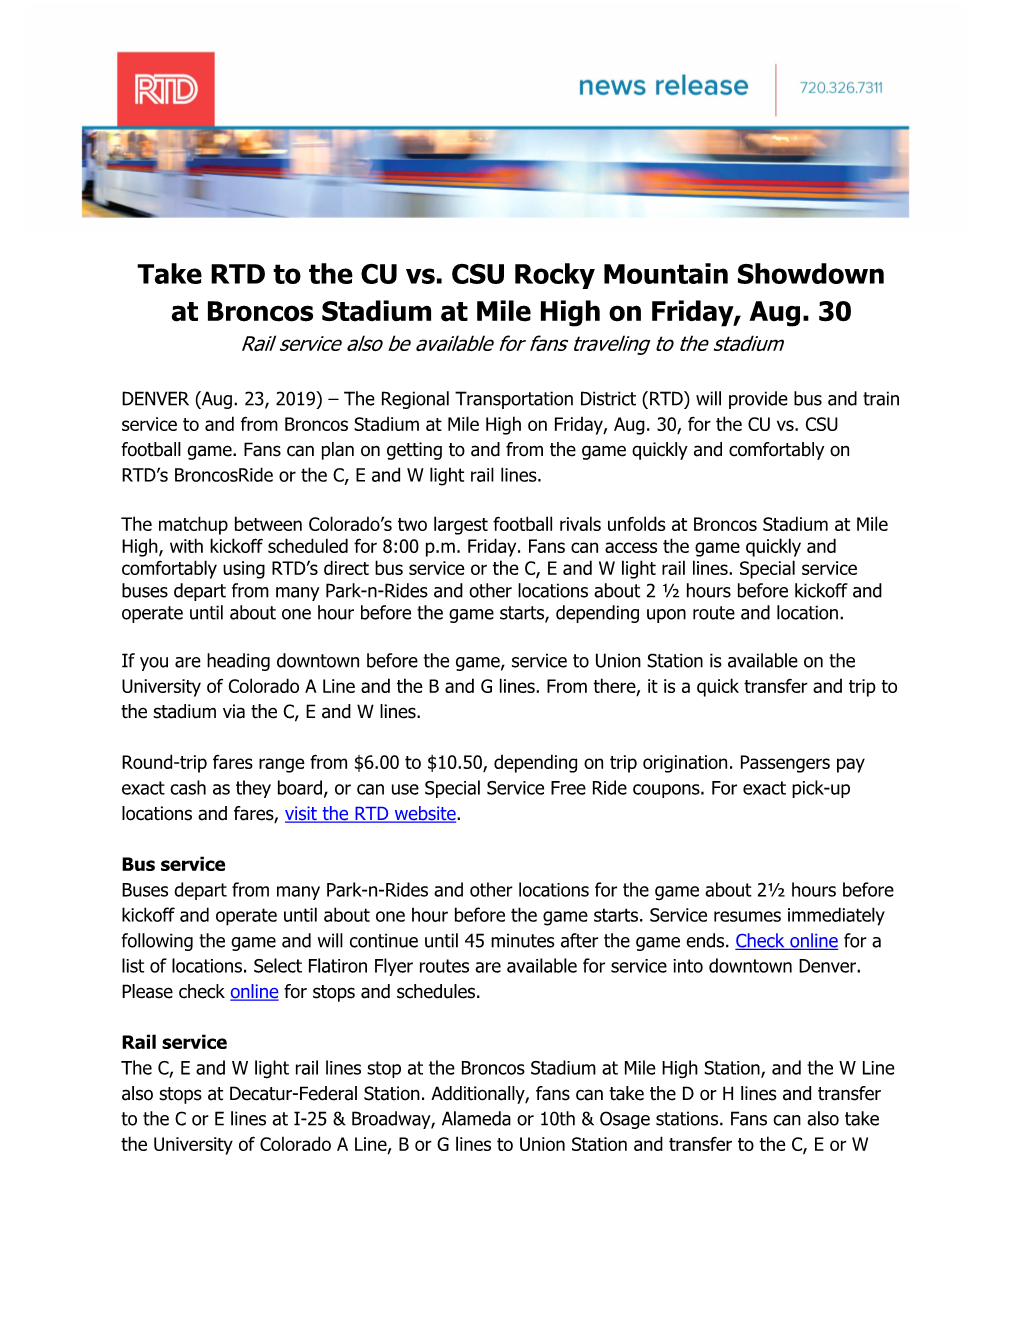 Take RTD to the CU Vs. CSU Rocky Mountain Showdown at Broncos Stadium at Mile High on Friday, Aug